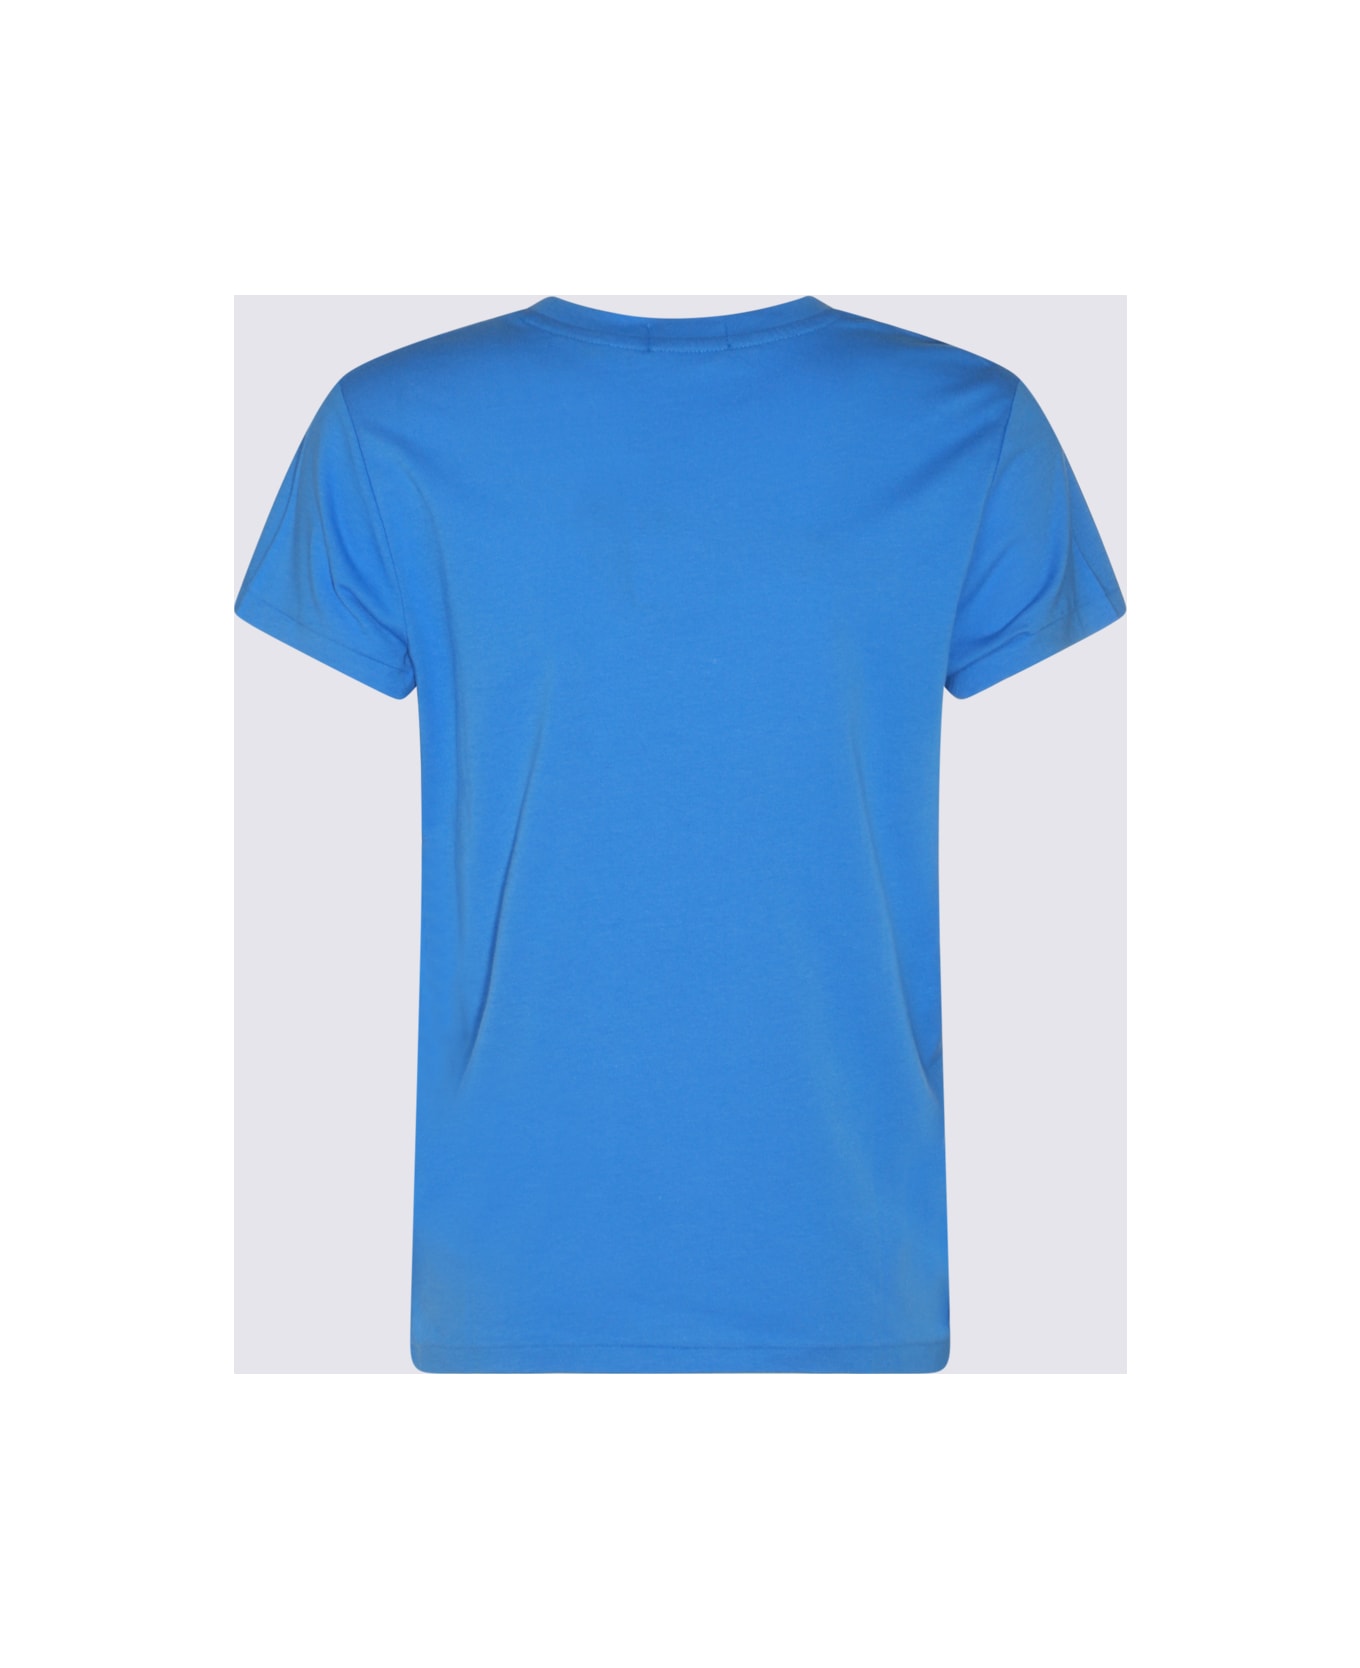 Polo Ralph Lauren Cobalt Blue And White Cotton T-shirt - COBALTO Tシャツ